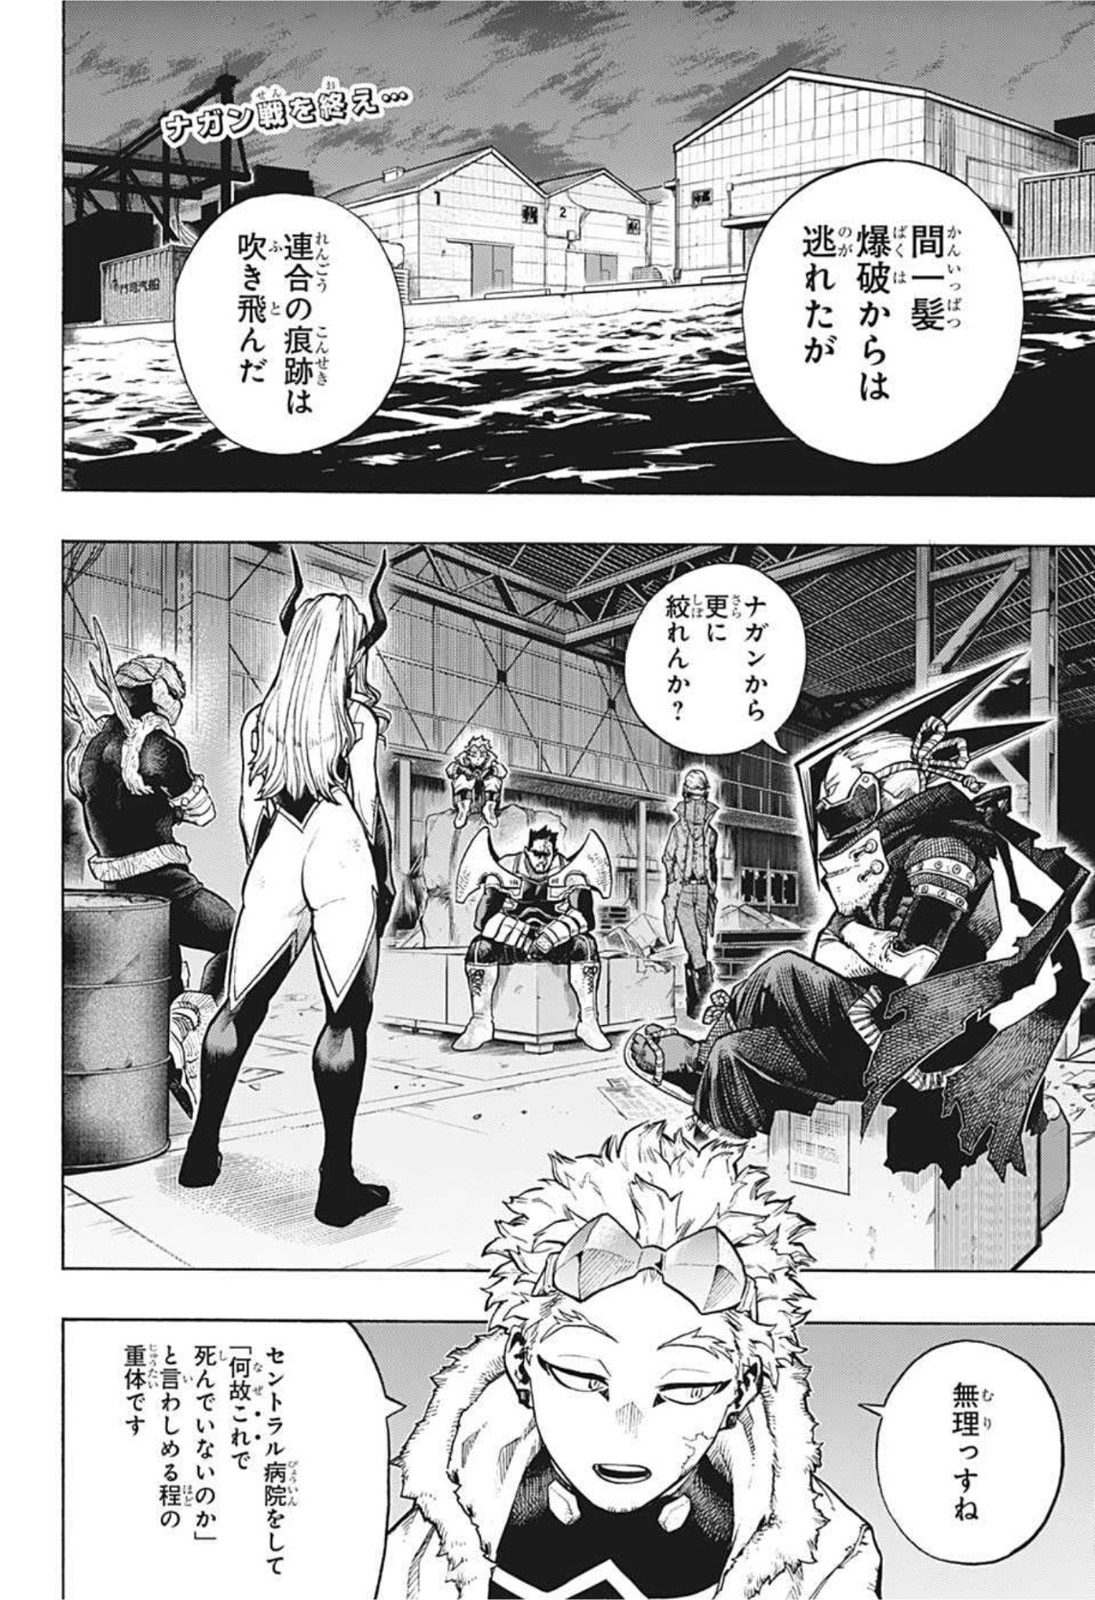 Boku no Hero Academia - Chapter 317 - Page 2